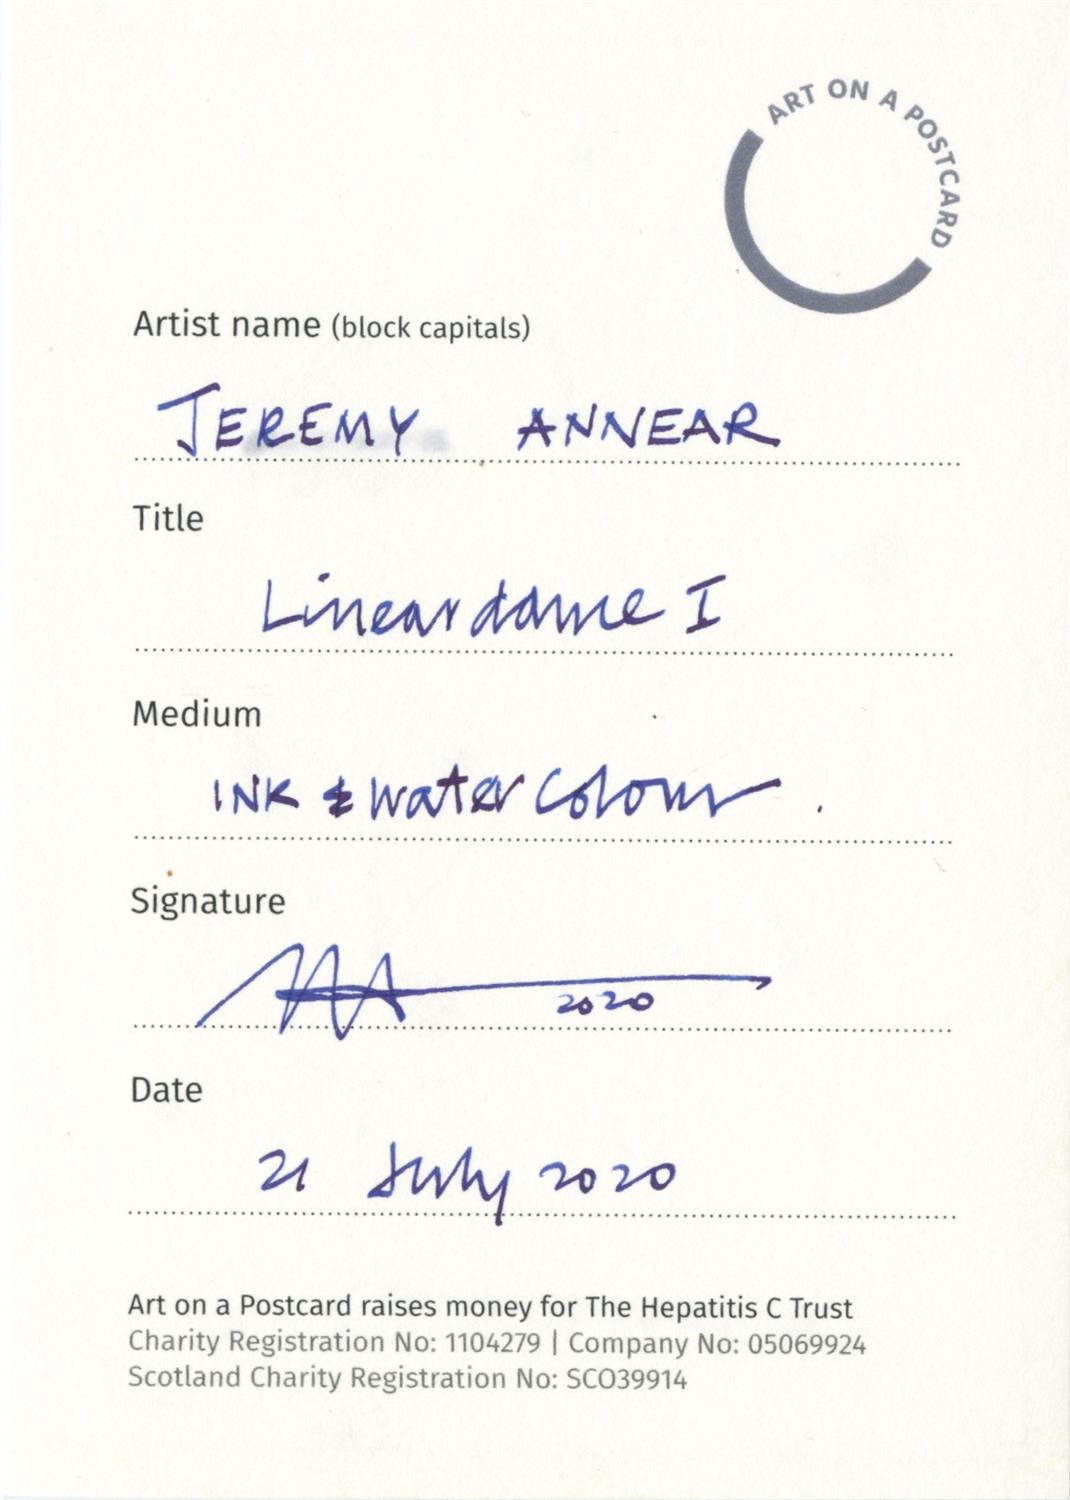 Jeremy Annear, Linear Dance I, 2020 - Image 2 of 3